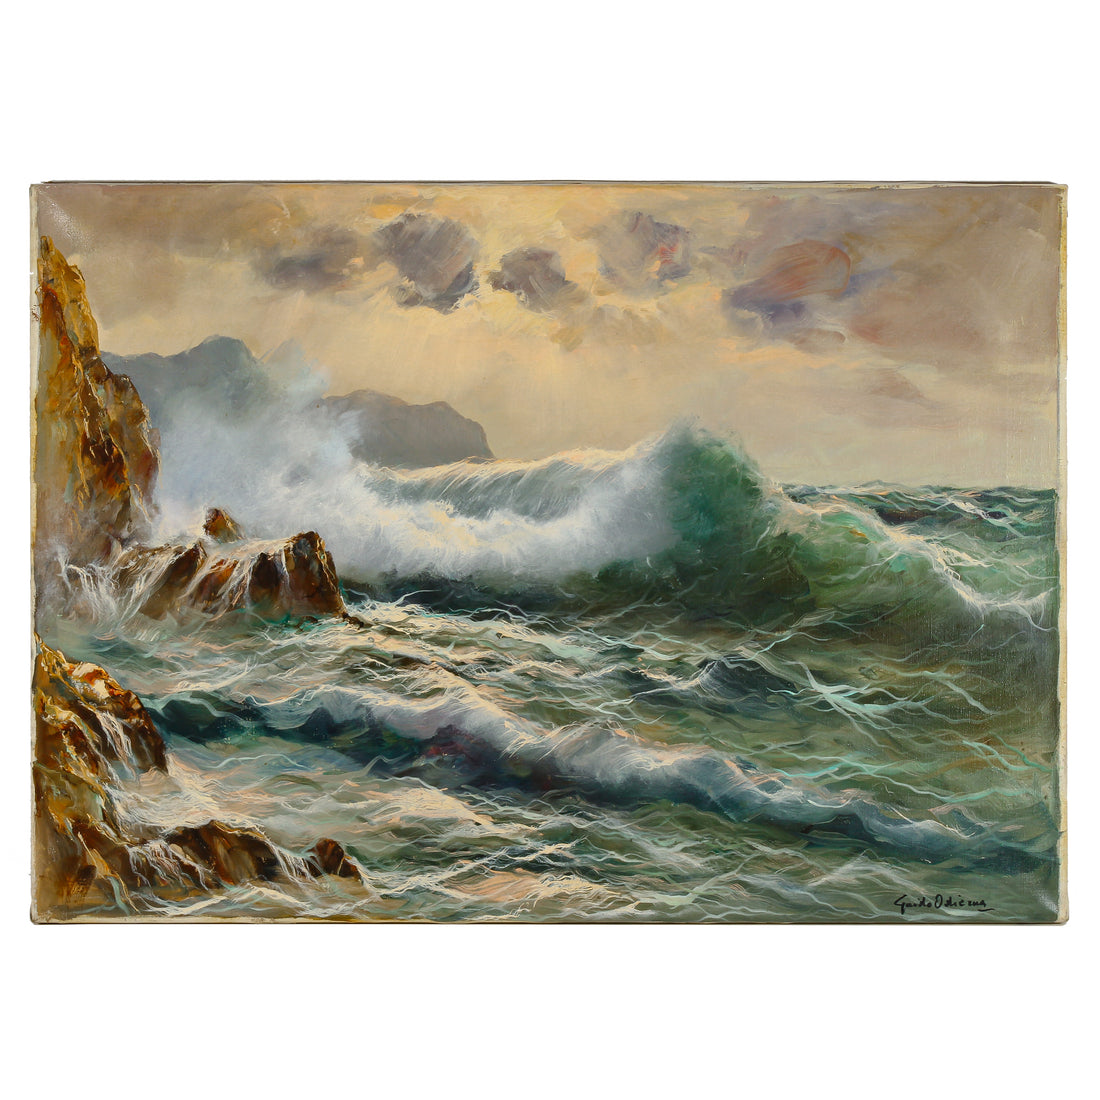 Guido Odierna - Crashing Waves Seascape - Oil on Canvas